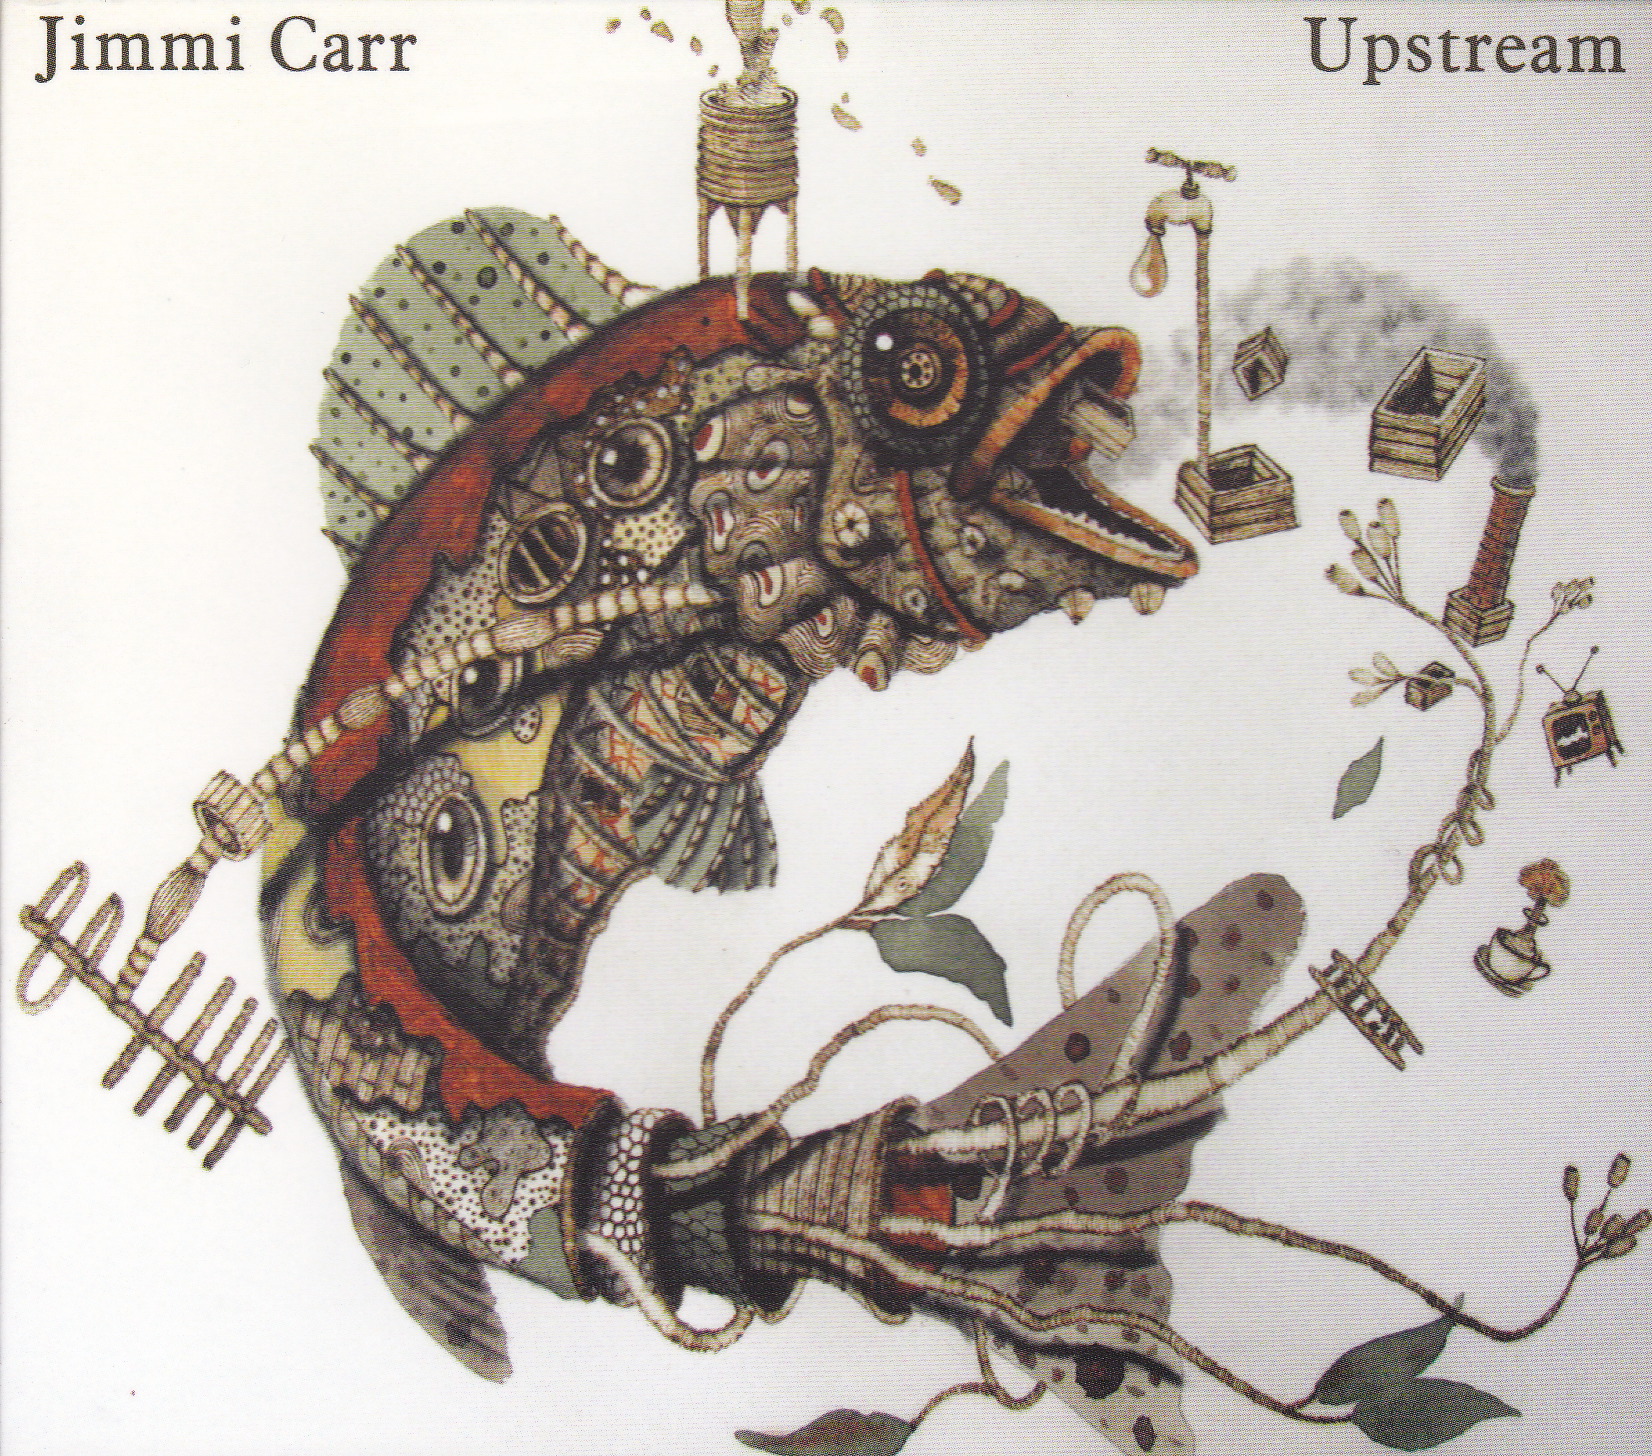 jimmi-carr-album-cover.jpg